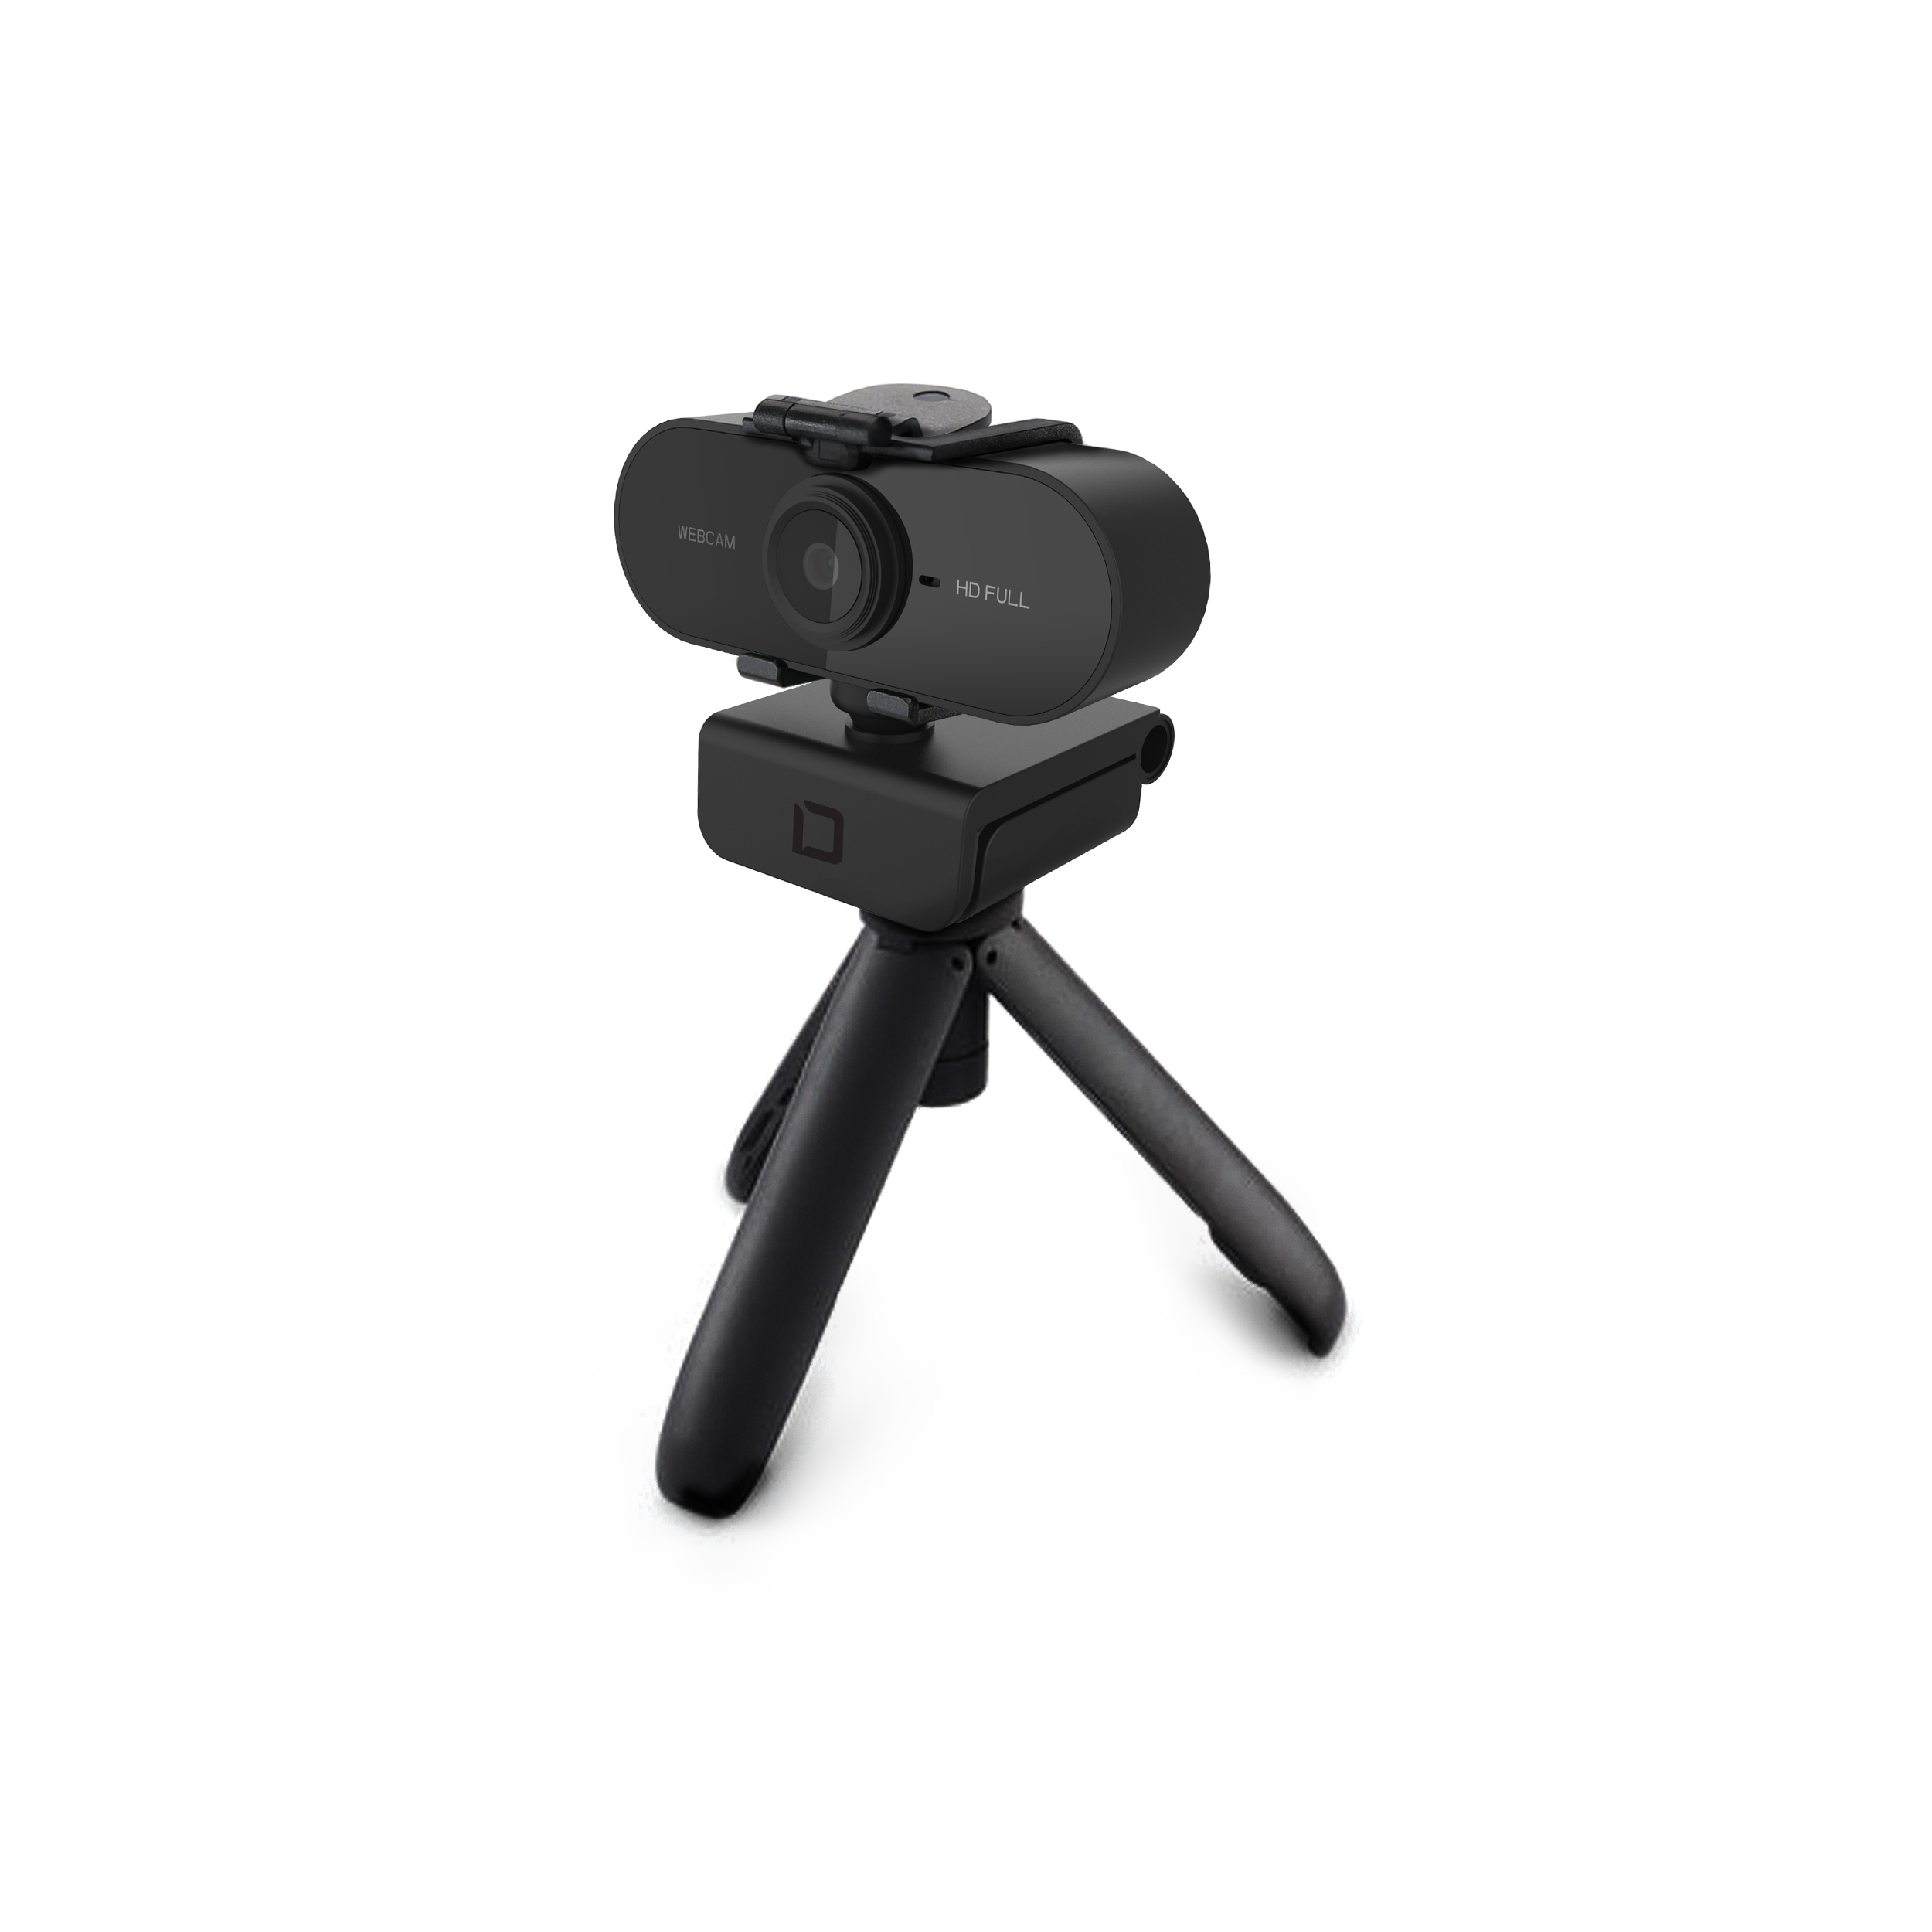  Webcam USB DICOTA PRO Plus Full HD 1080p autofocus avec microphone (D31841), informatique ile de la Runion 974